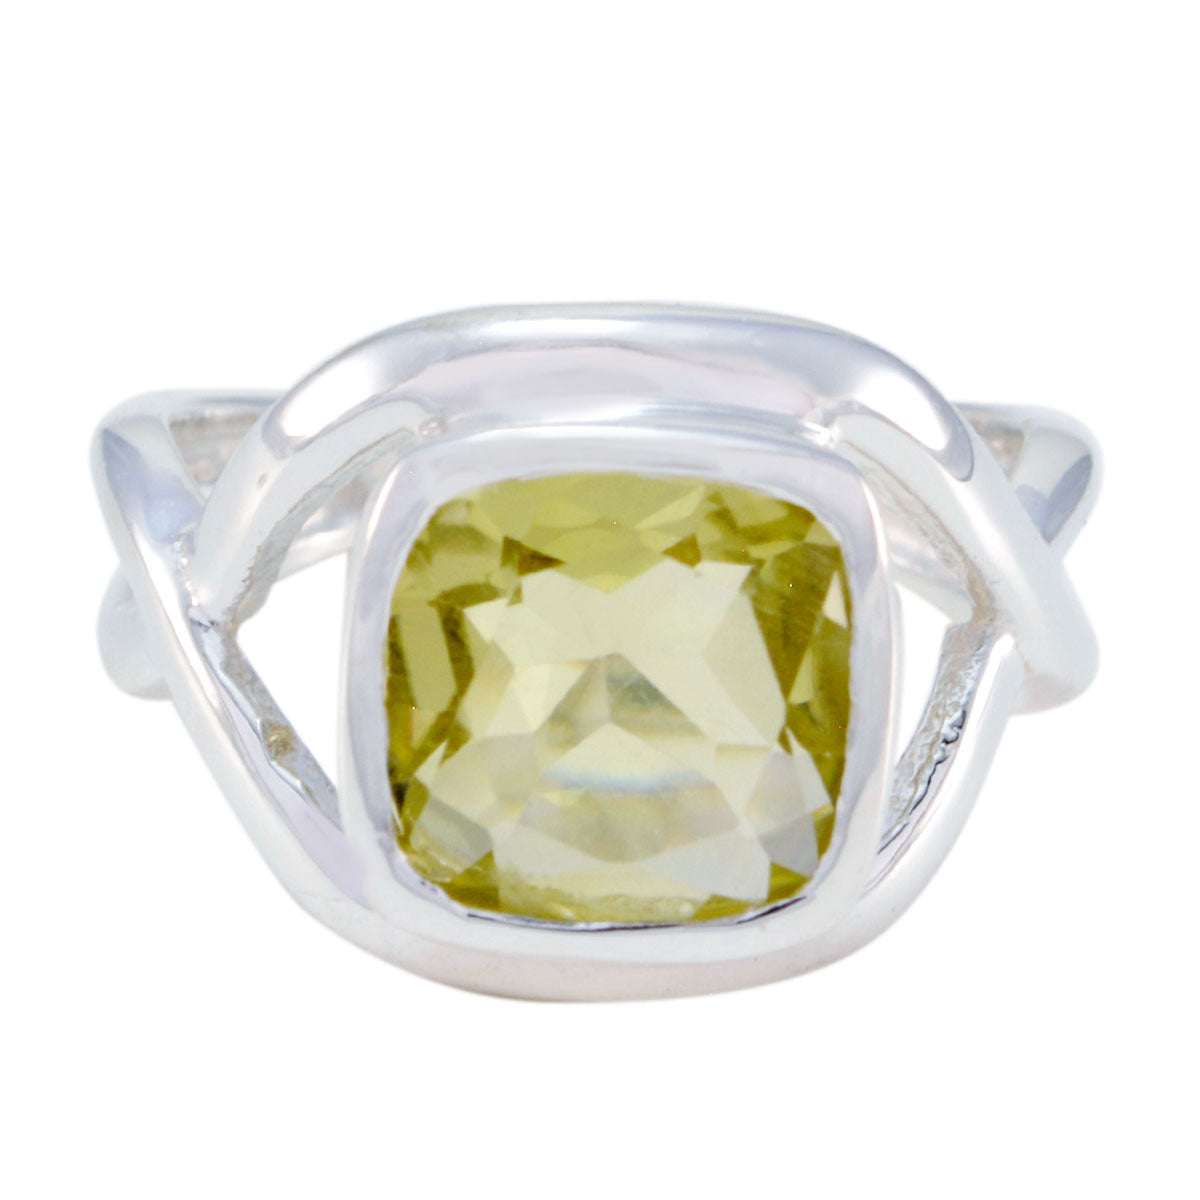 Riyo Nice Stone Lemon Quartz Solid Silver Ring Tree Of Life Jewelry